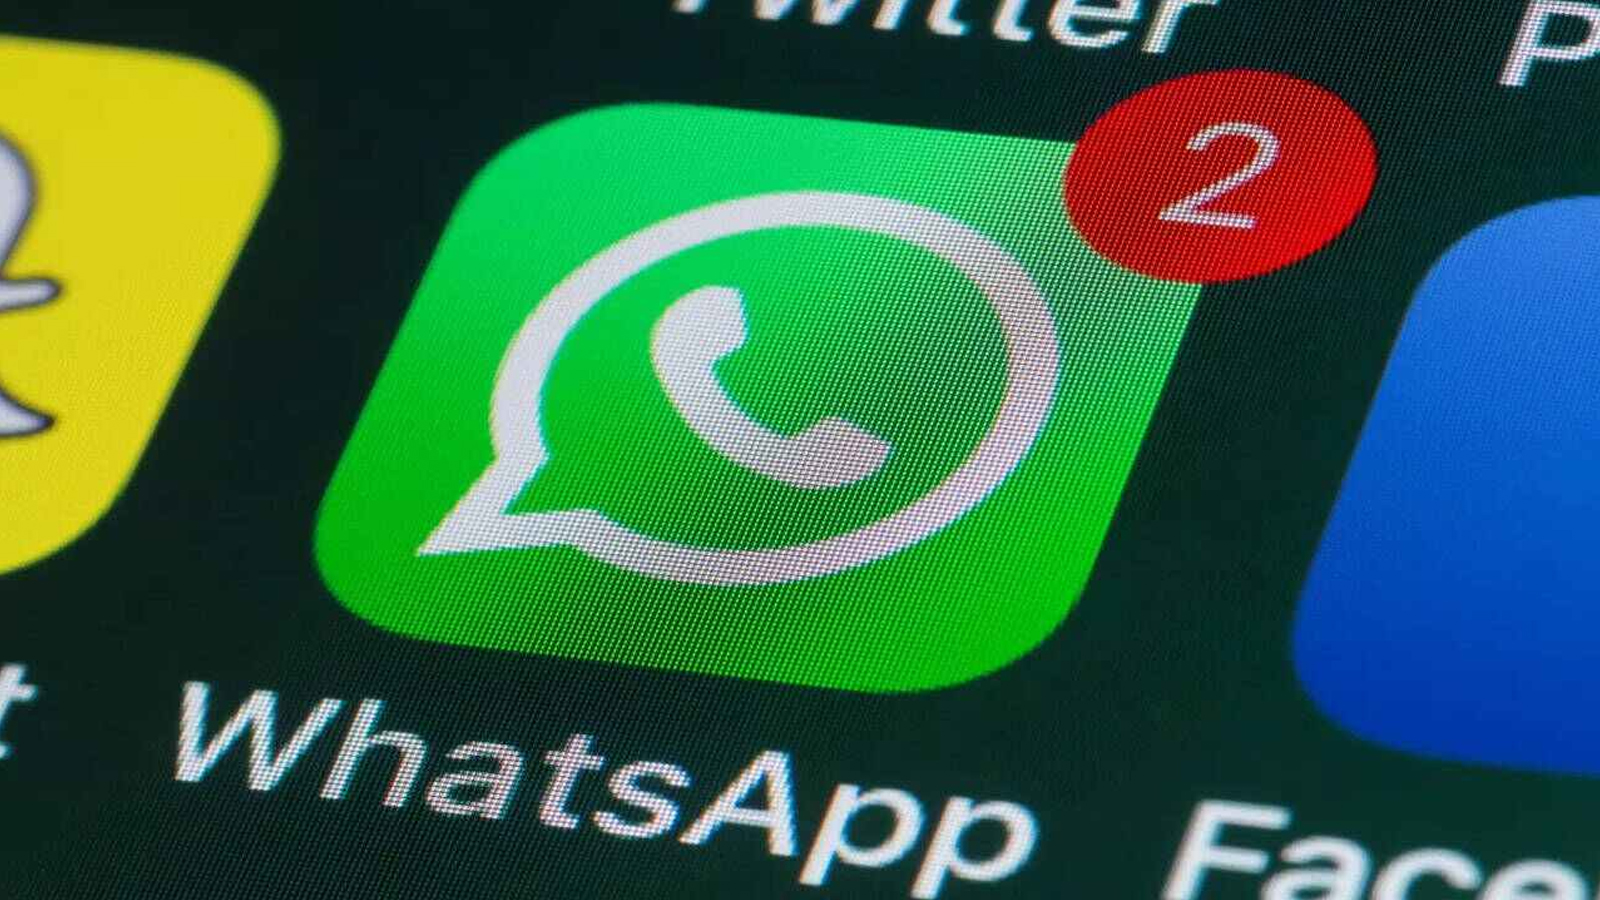 WhatsApp Block Feature